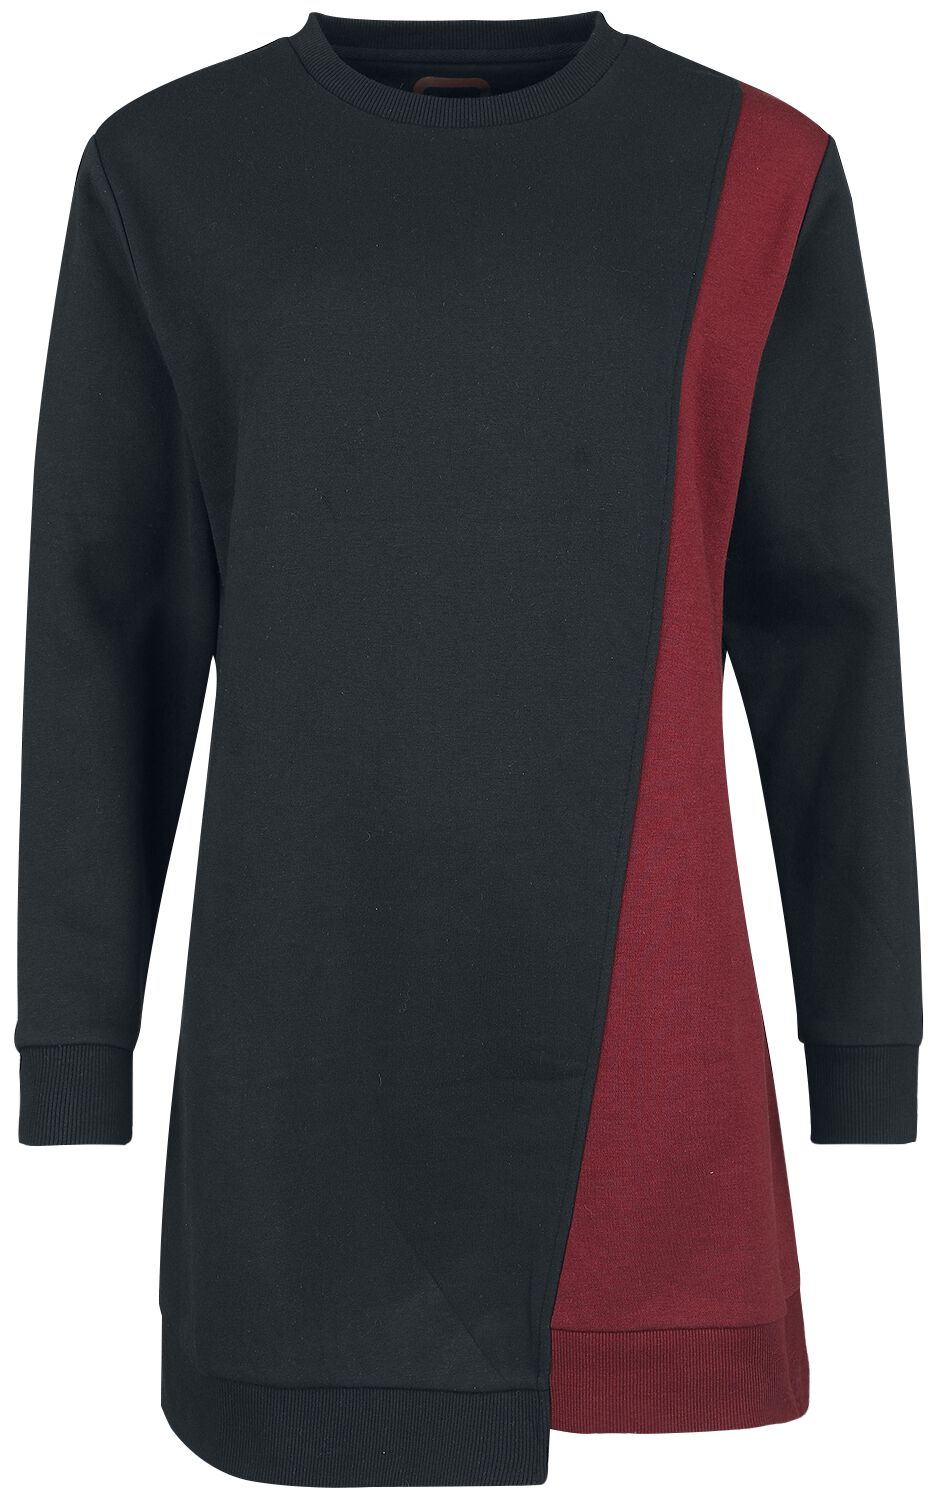 RED by EMP - Sweatshirt Dress with asymmetrical Cut - Kurzes Kleid - schwarz|dunkelrot - EMP Exklusiv!